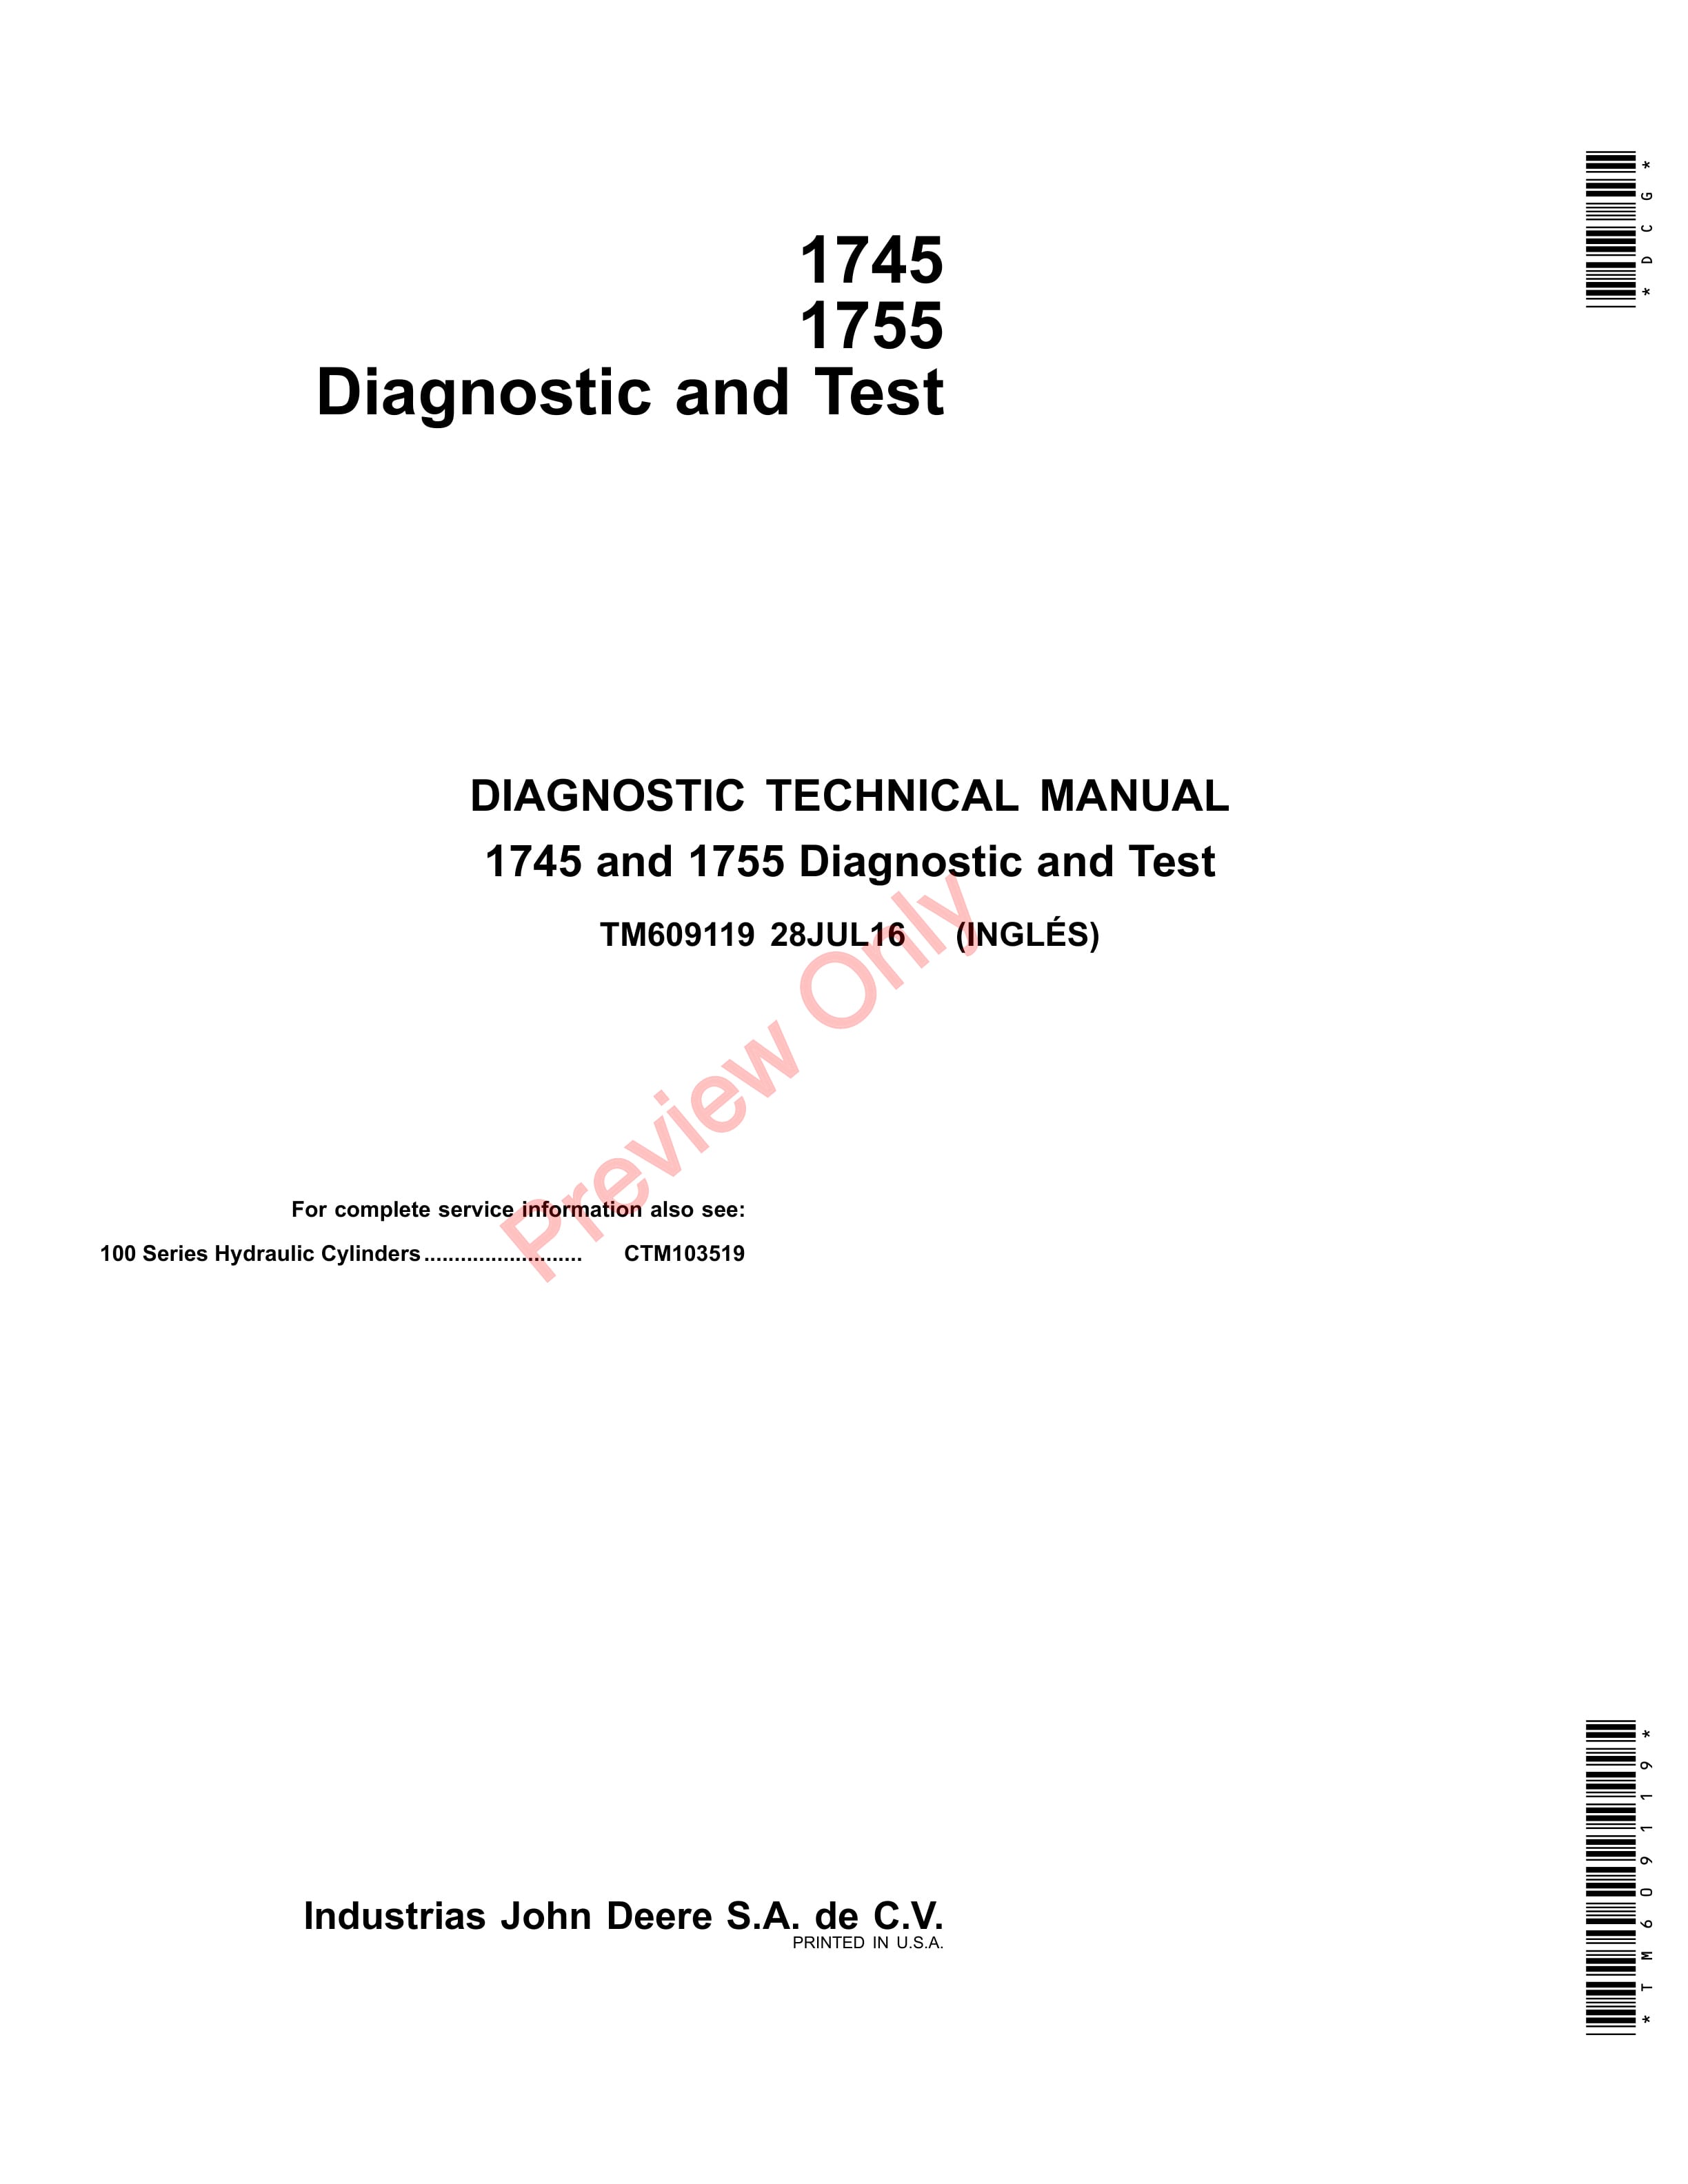 John Deere 1745 and 1755 Planter Frames Diagnostic Technical Manual TM609119 28JUL16-1